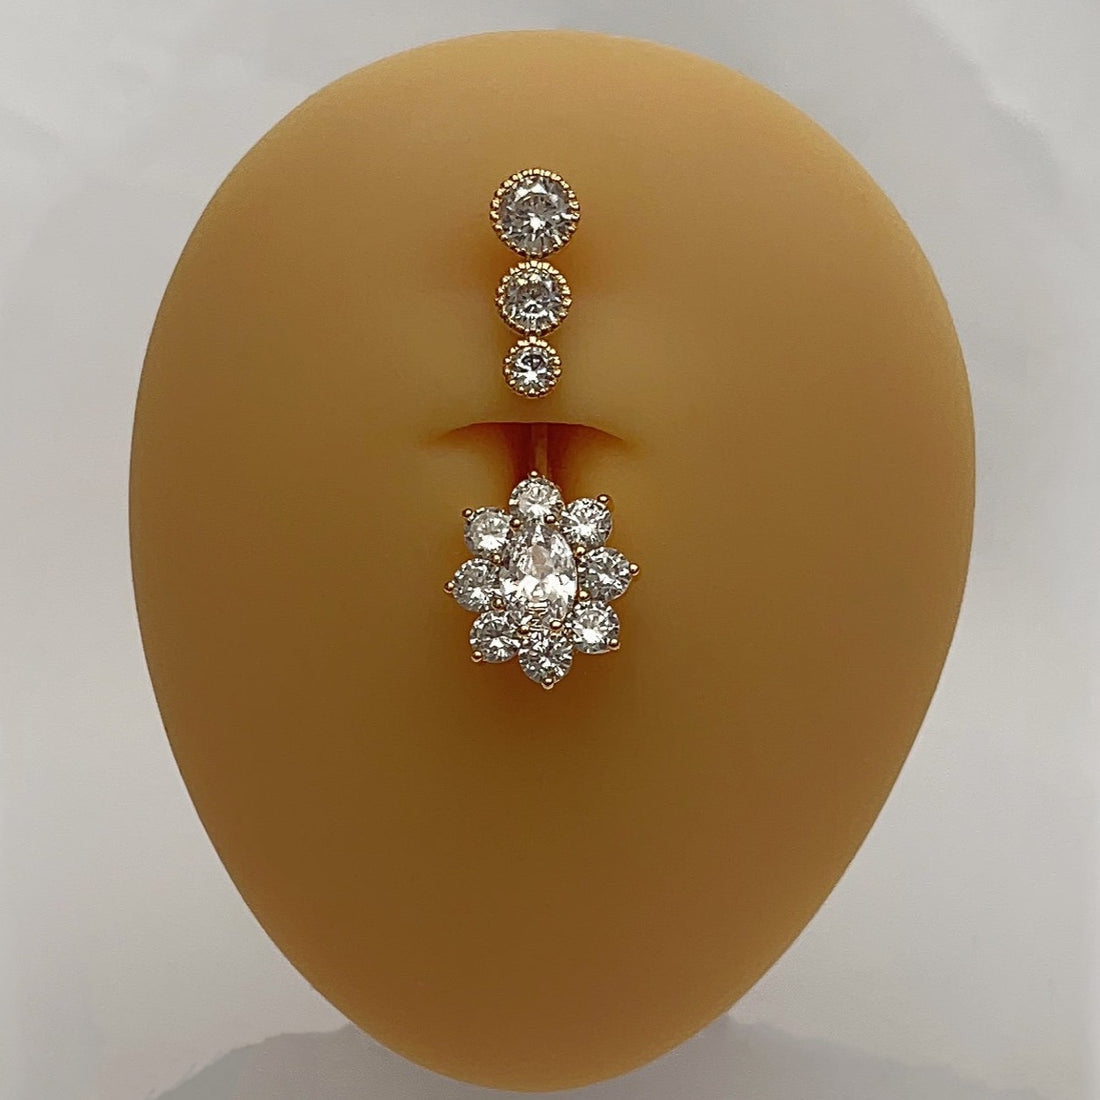 Dreifache Diamantblume | Bauchnabelpiercing